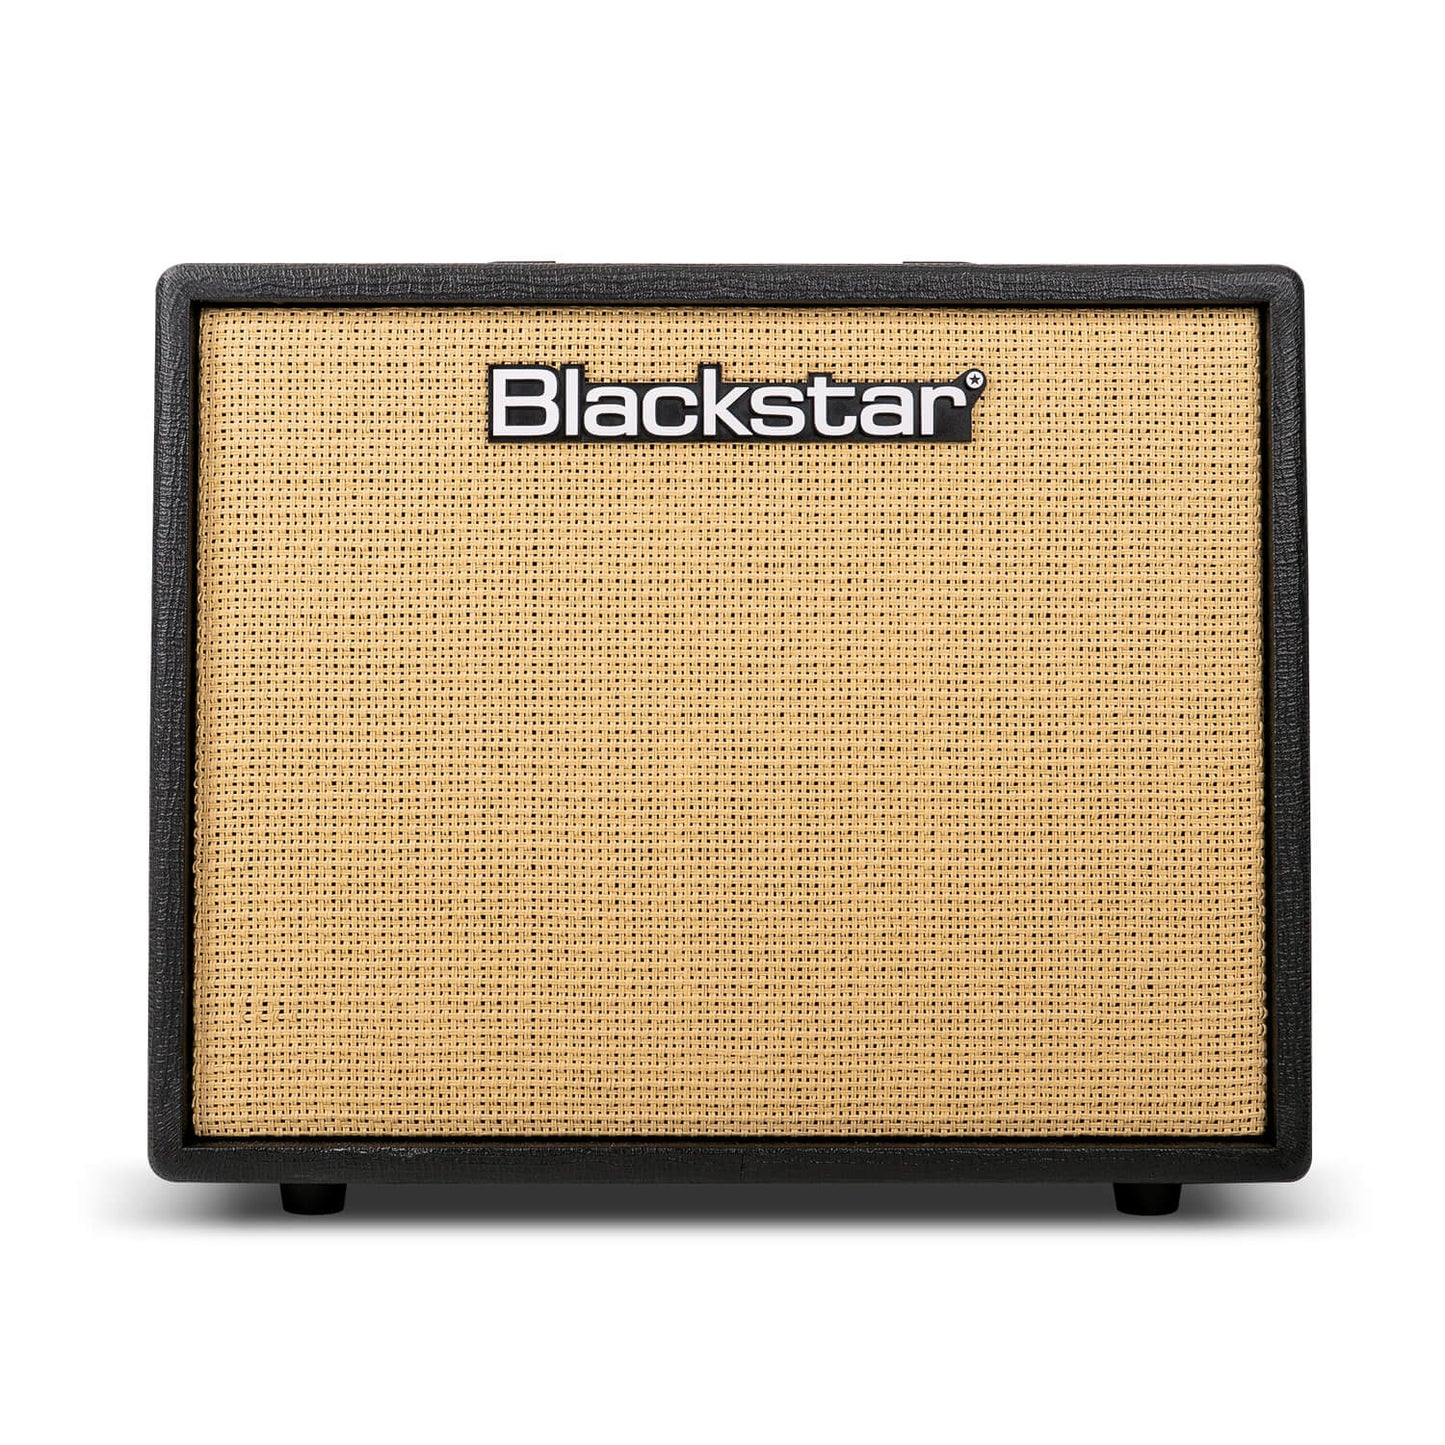 Blackstar Debut 50R Guitar Amplifier - Black & Cream (Each)